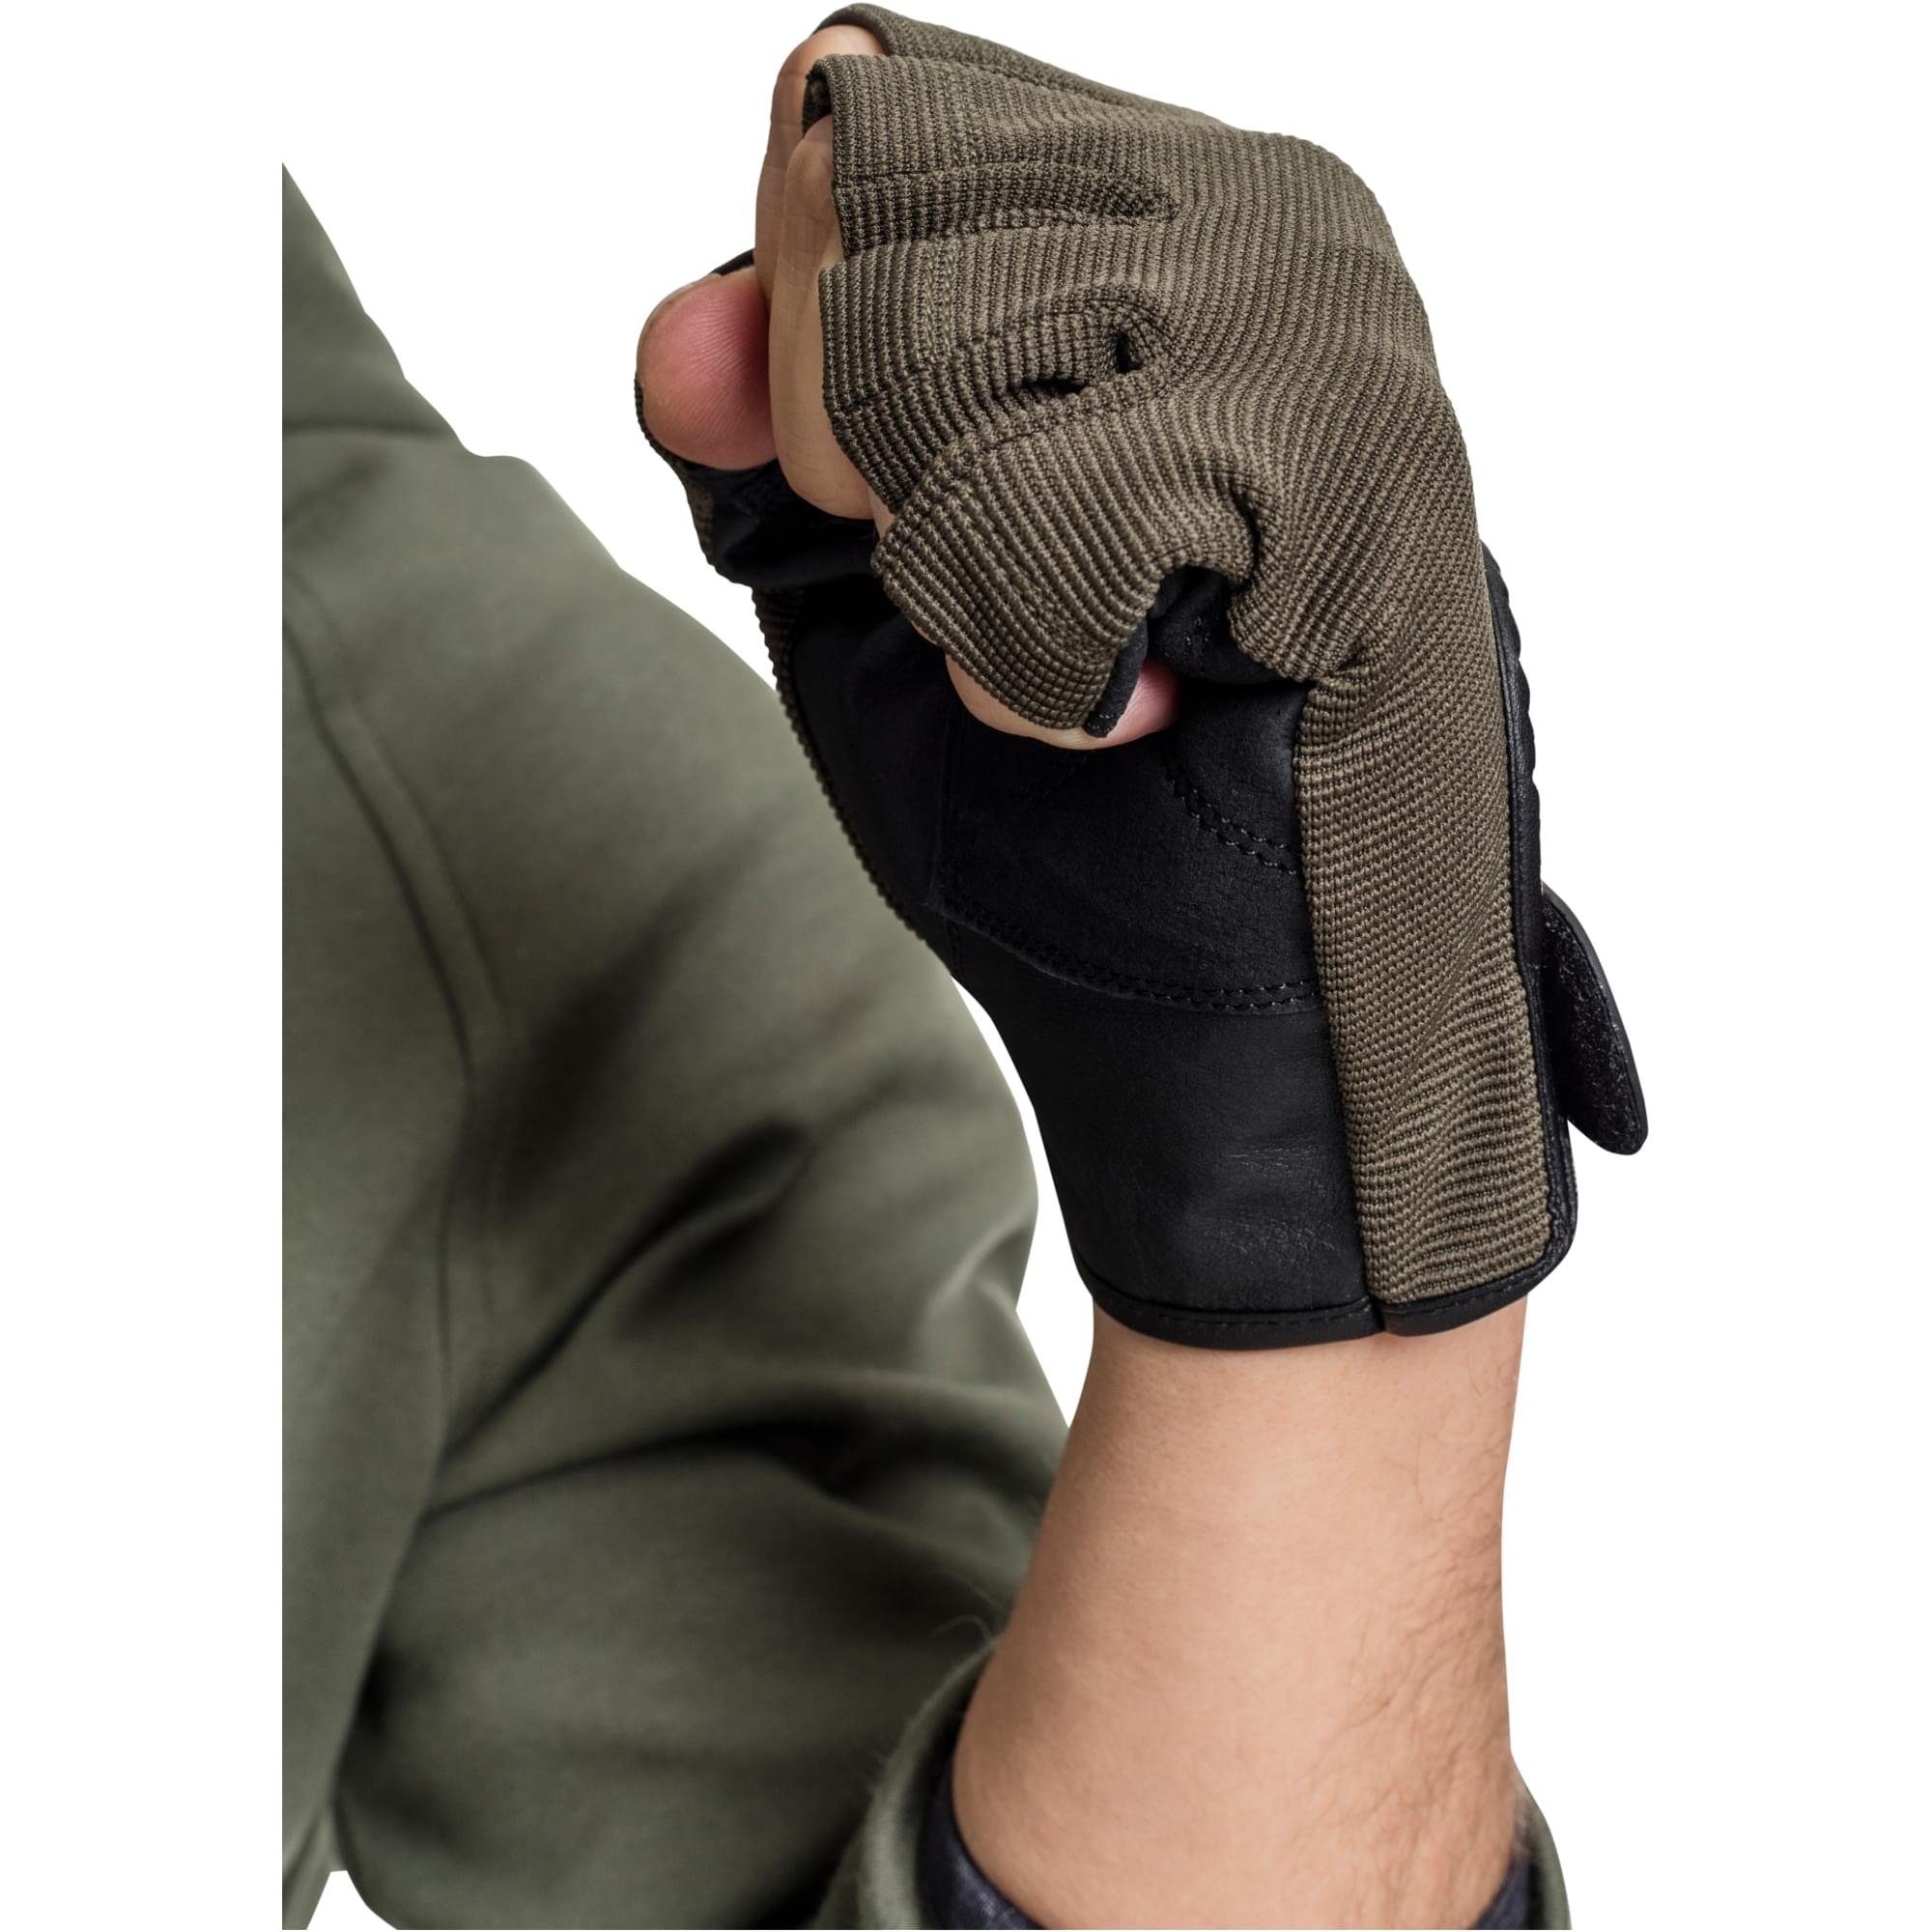 GORILLA SPORTS Trainingshandschuhe Leder, - Khaki - Handschuhe XS/S/M/L/XL, Farbwahl Fitness Sporthandschuhe